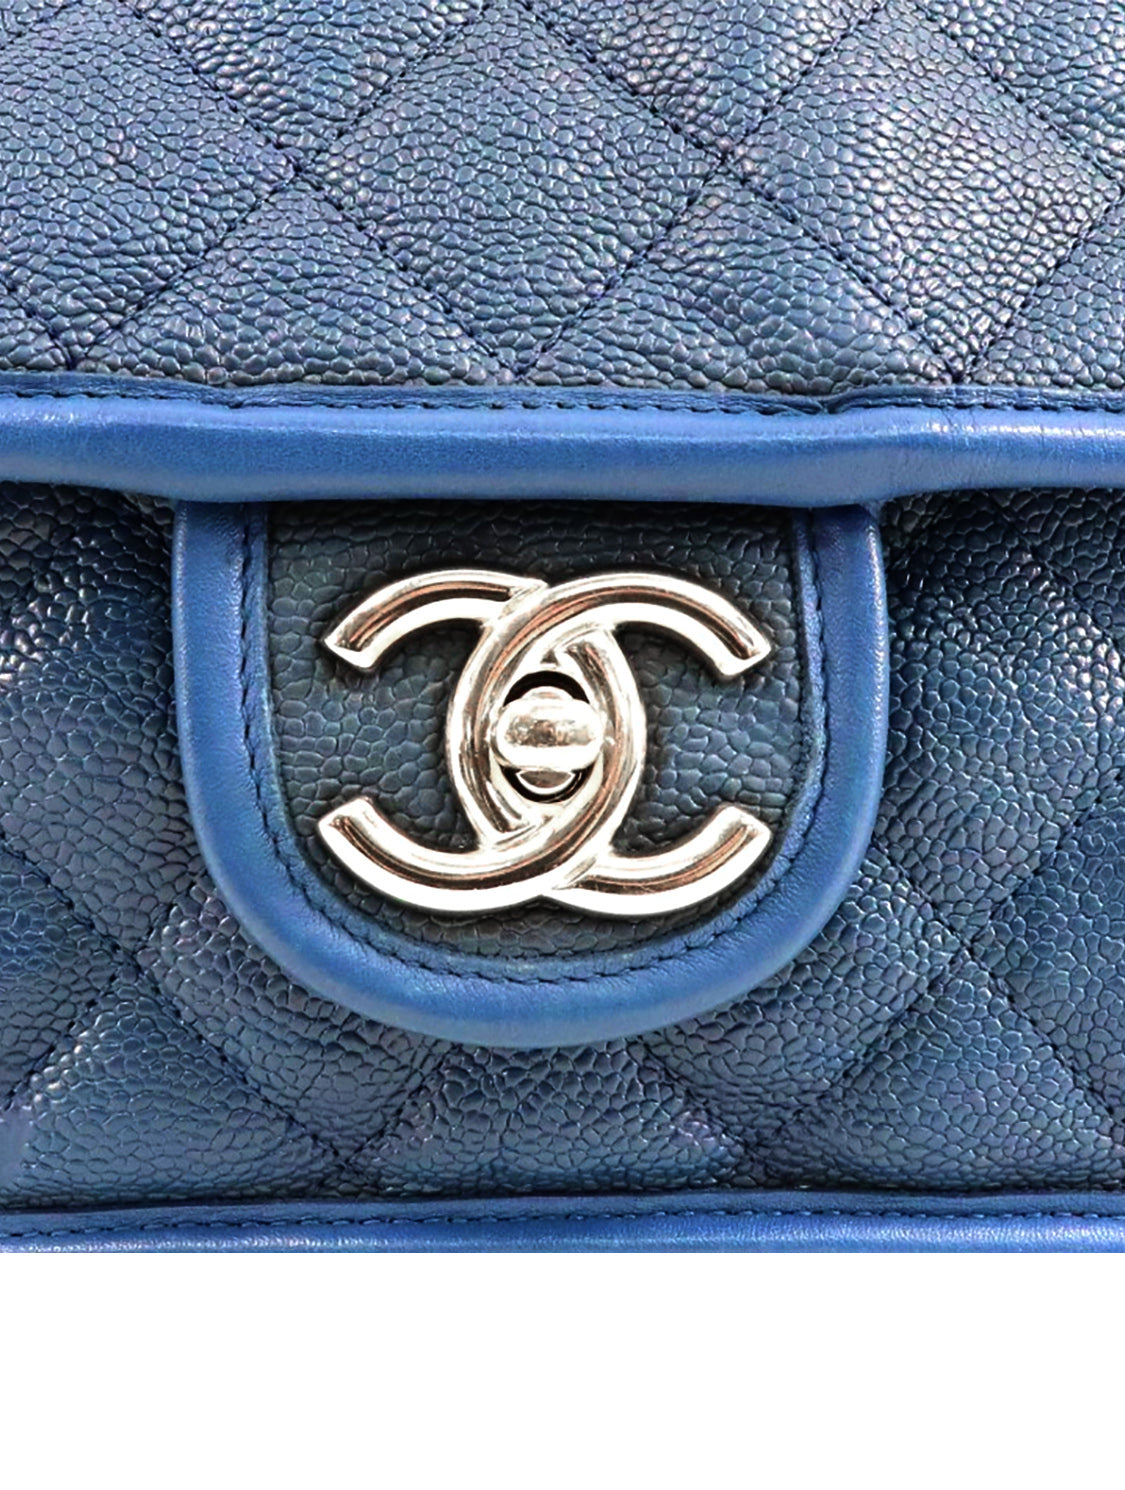 Chanel 2010s Blue Leather Trimmed Rare Handbag